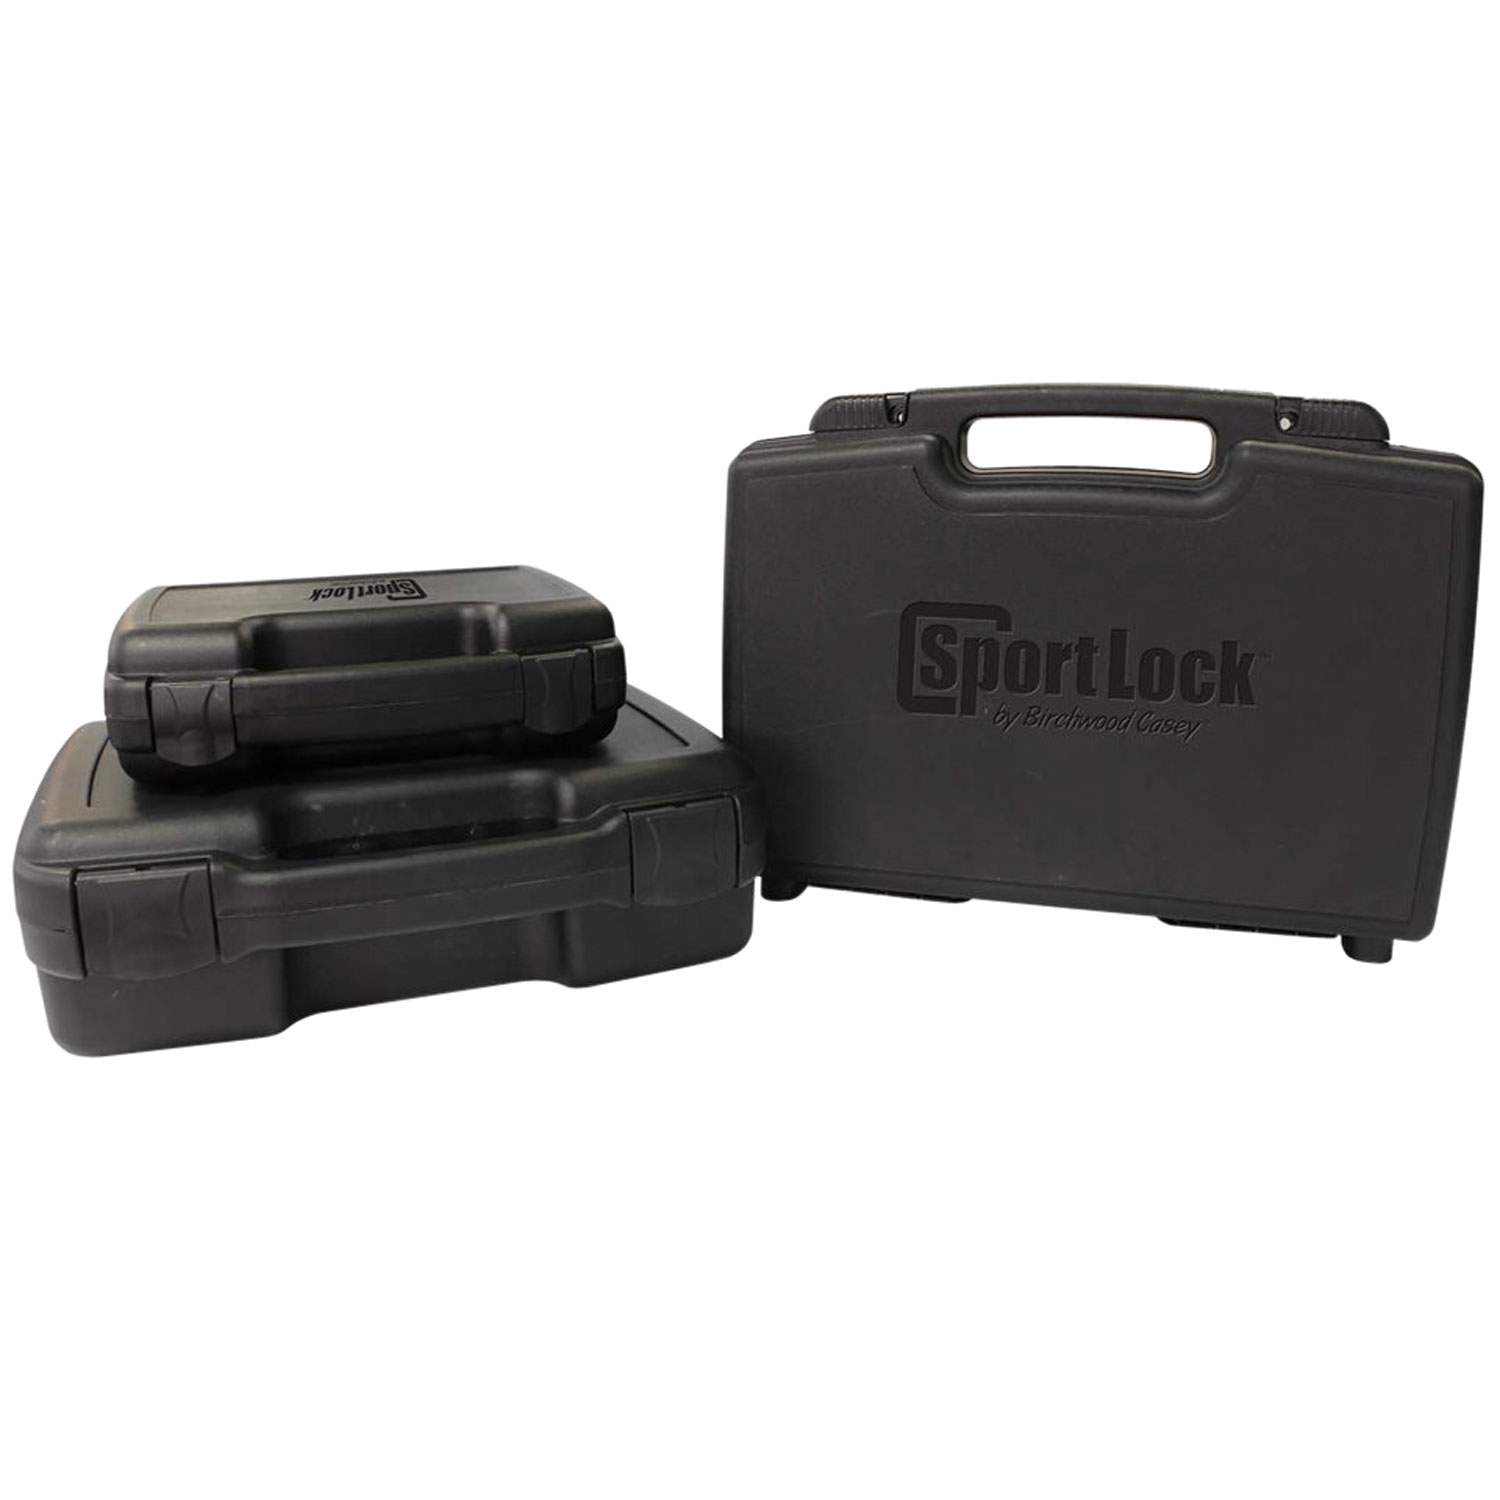 Birchwood Casey 03004 SportLock Single Handgun Case made of Molded Plastic with Black Finish, Snaps, Foam Padding & is Lockable 7.50